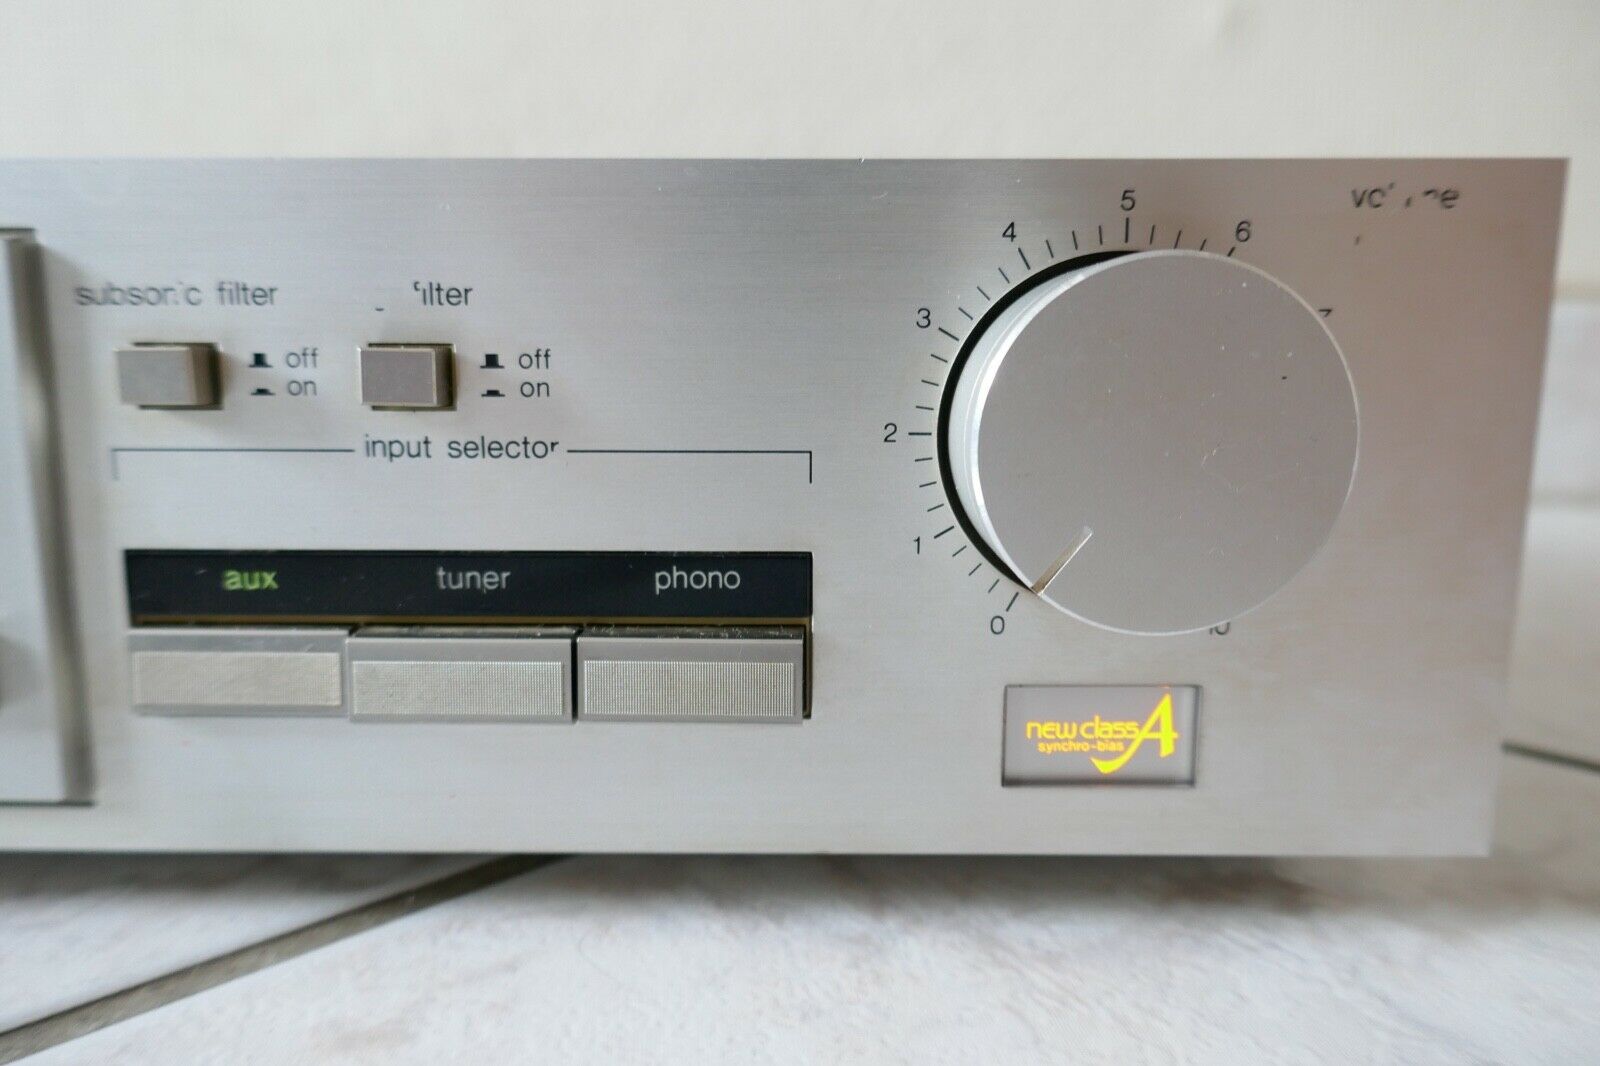 amplificateur amplifier technics SU-Z65 vintage occasion